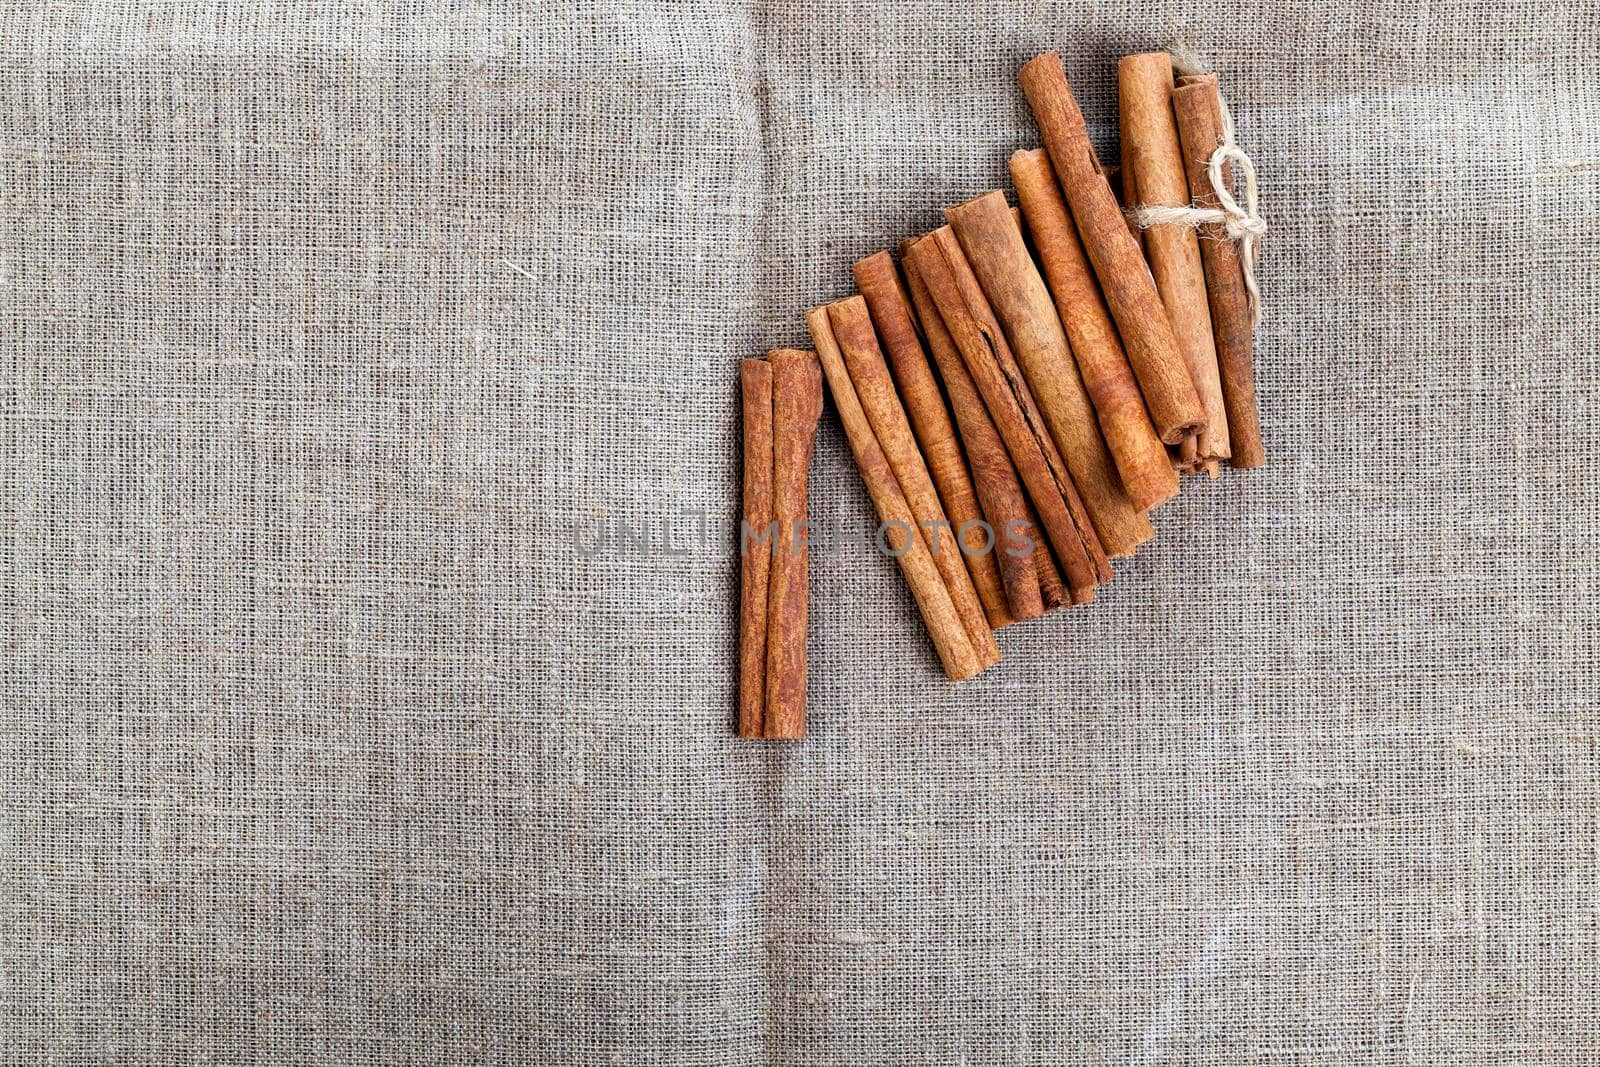 long sticks of cinnamon by avq